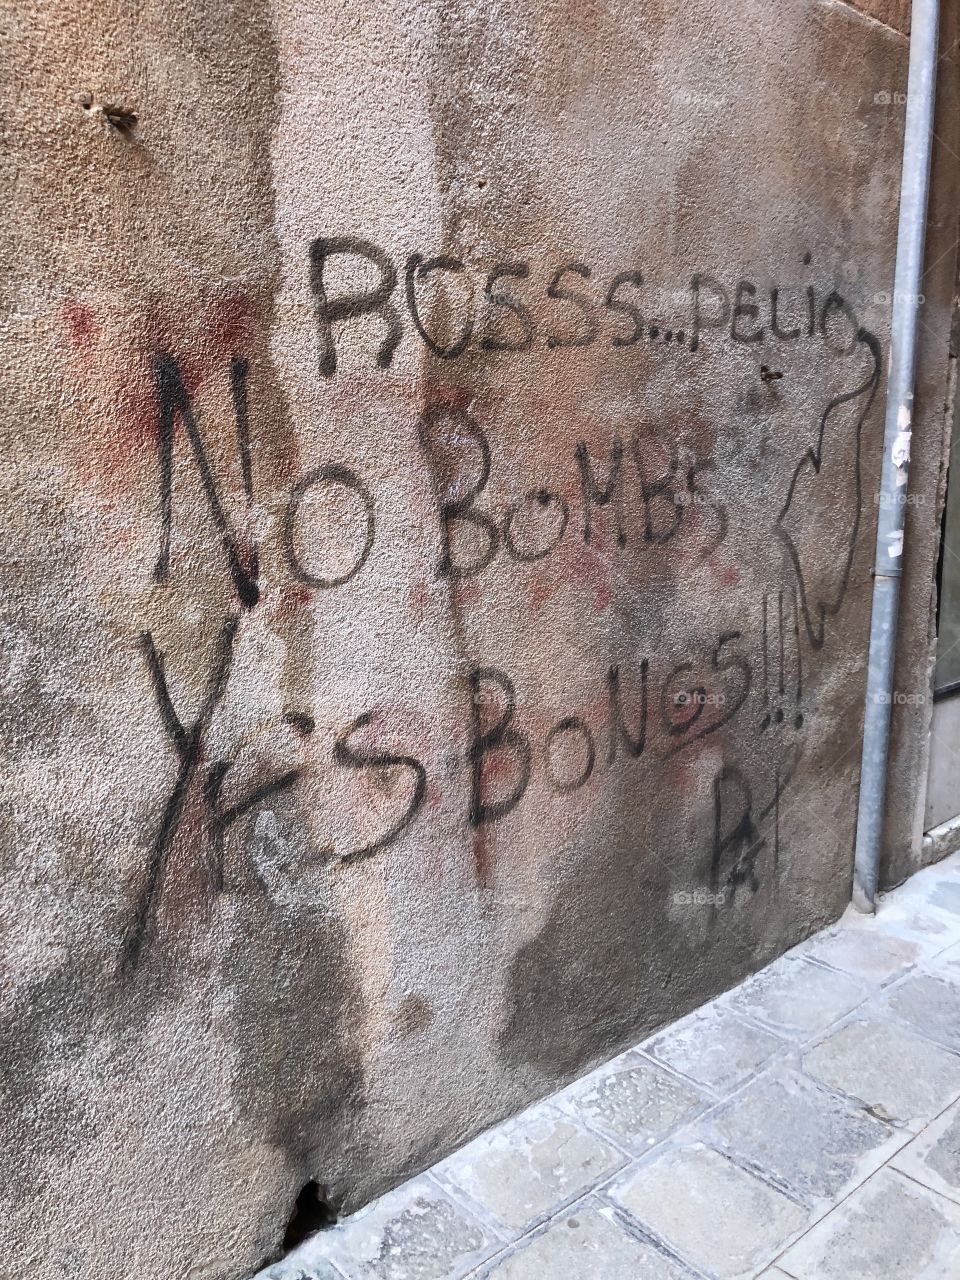 Graffiti in Venice October 2018